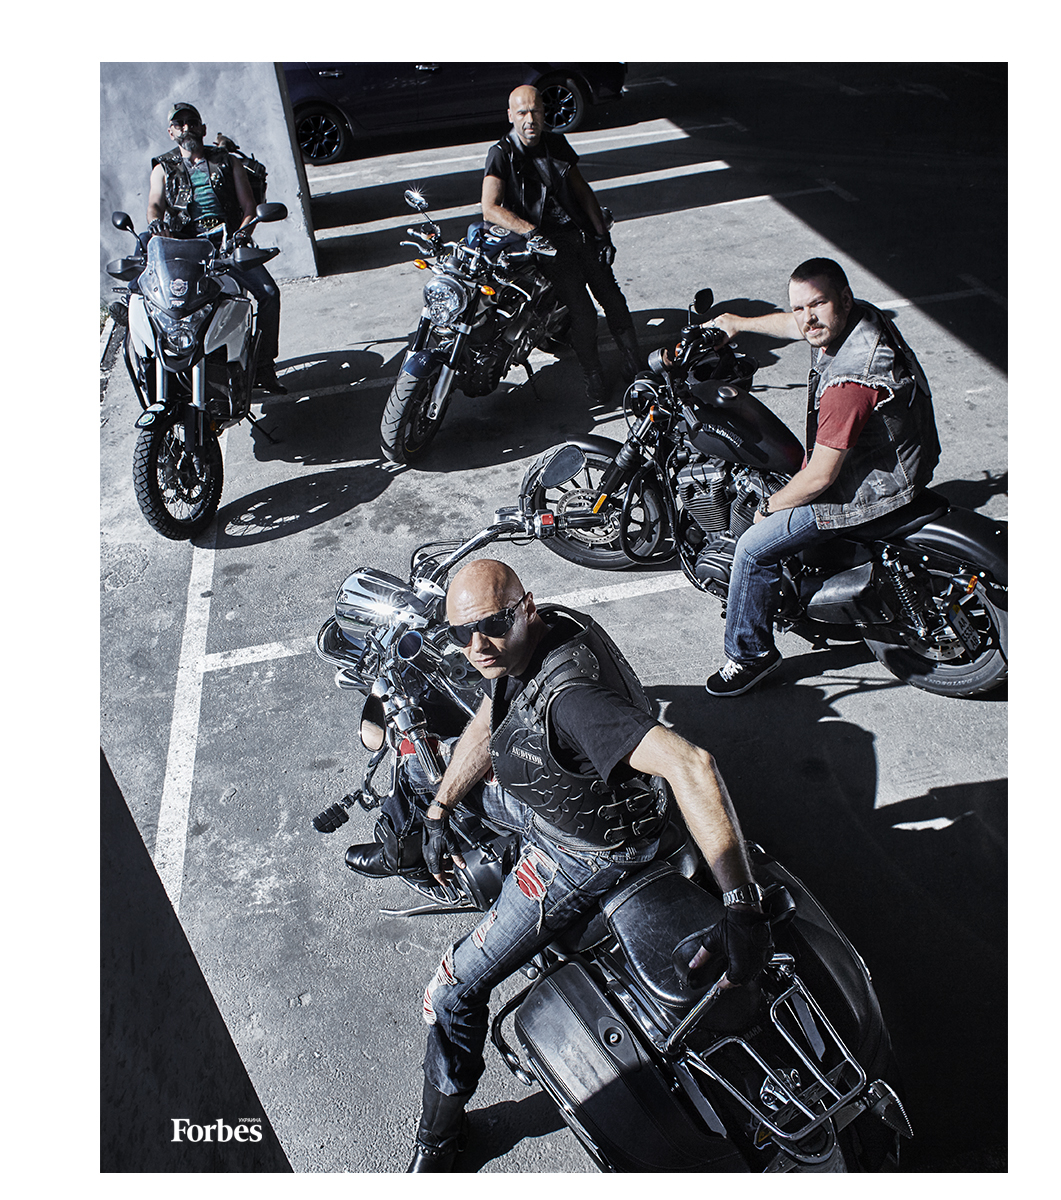 Bike Harley Davidson harleydavidson yamaha black man ukraine Forbes warszawa poland